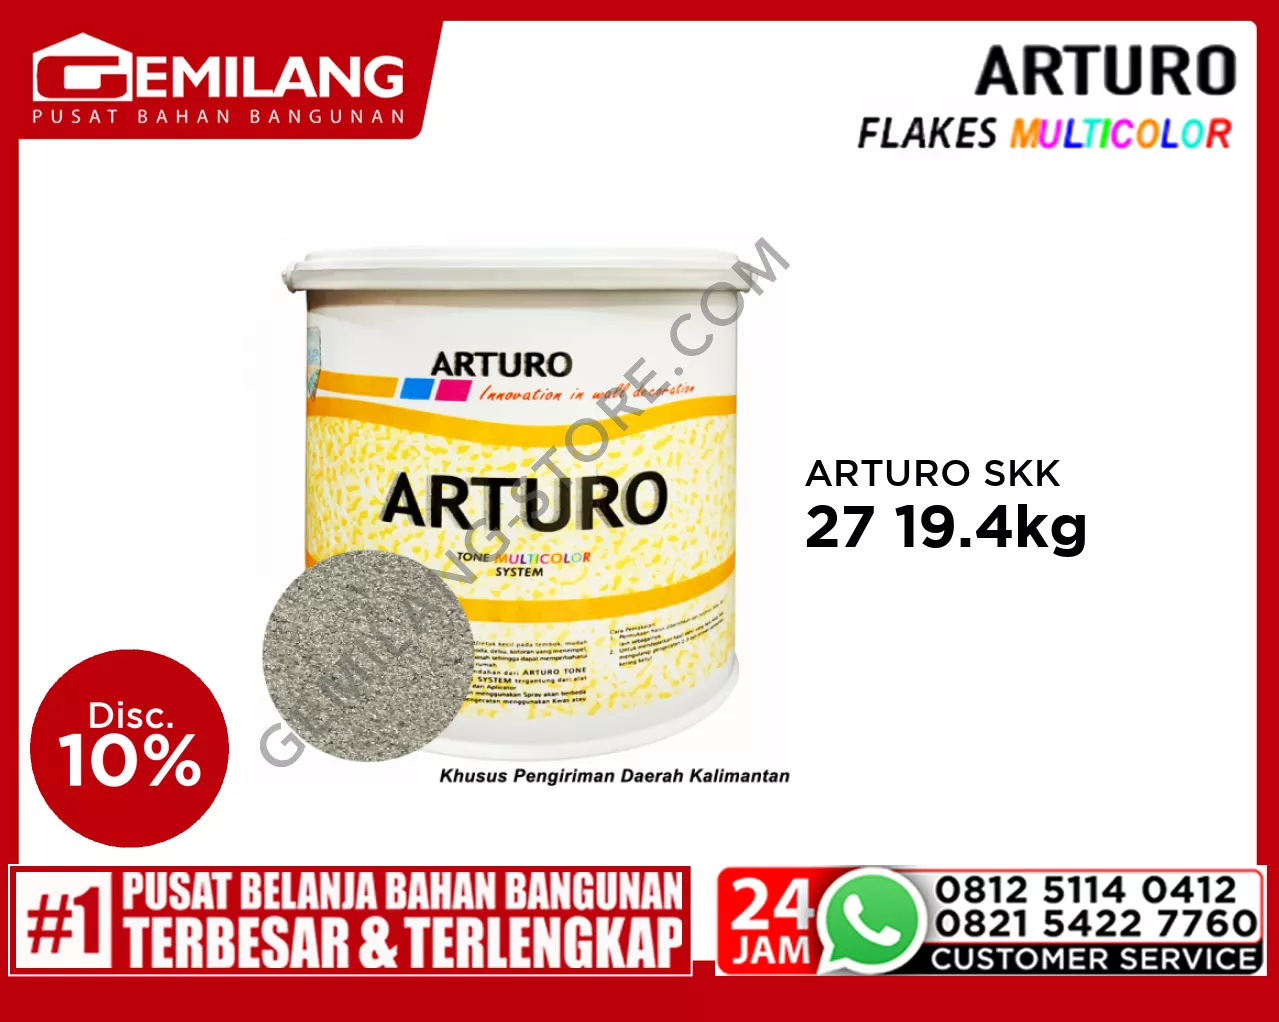 ARTURO FLAKES MULTICOLOR SKK 27 19.4kg